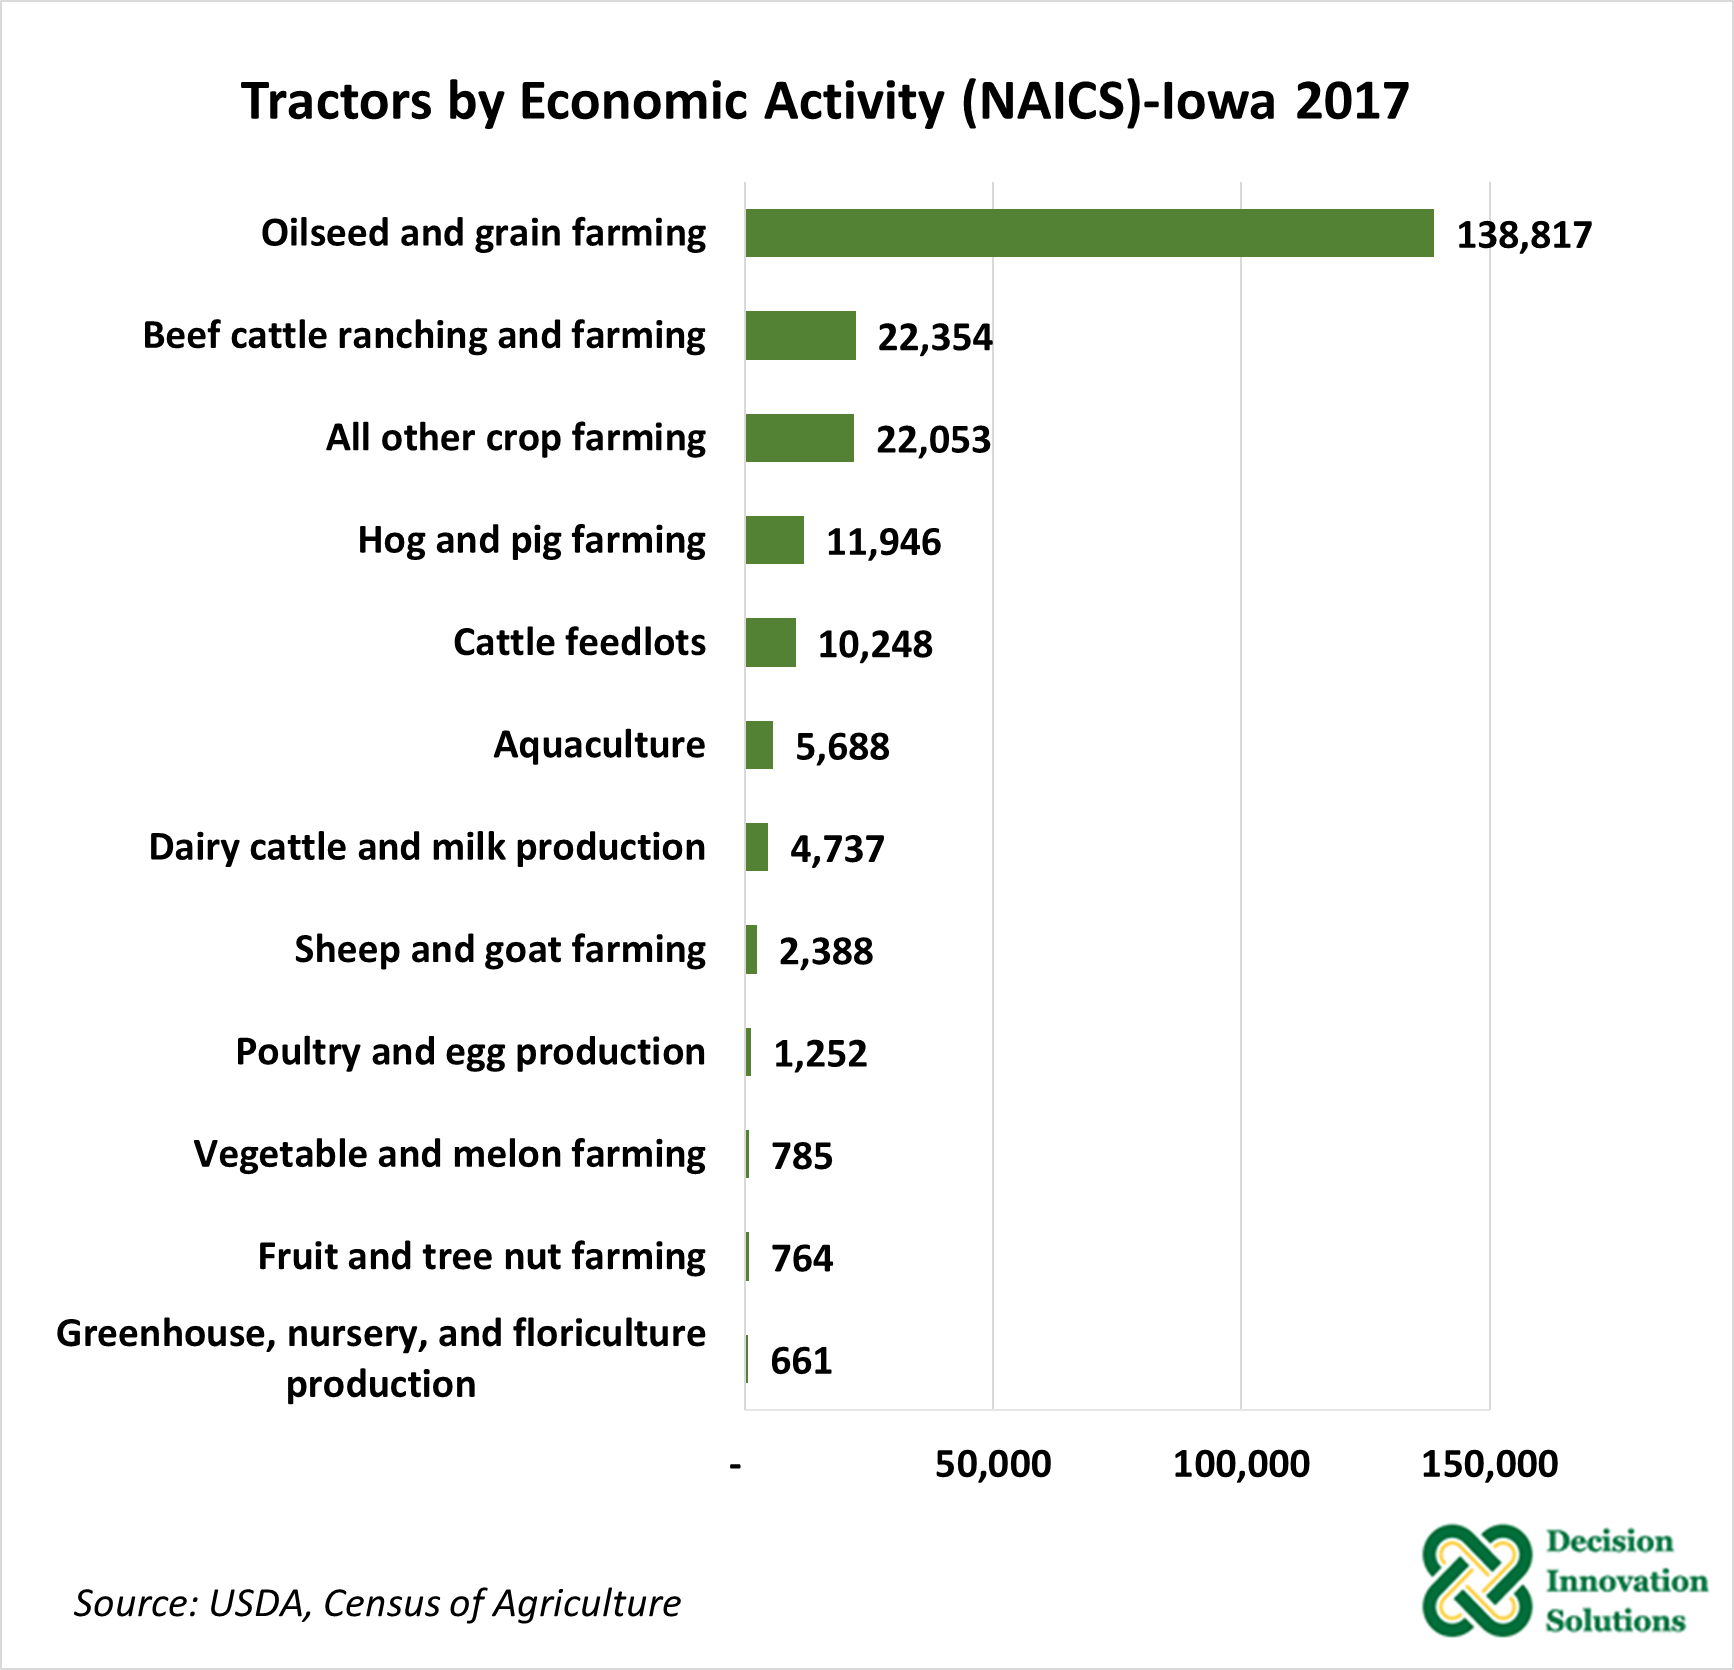 Figure 3. Tractors by Economic Activity (NAICS) - Iowa 